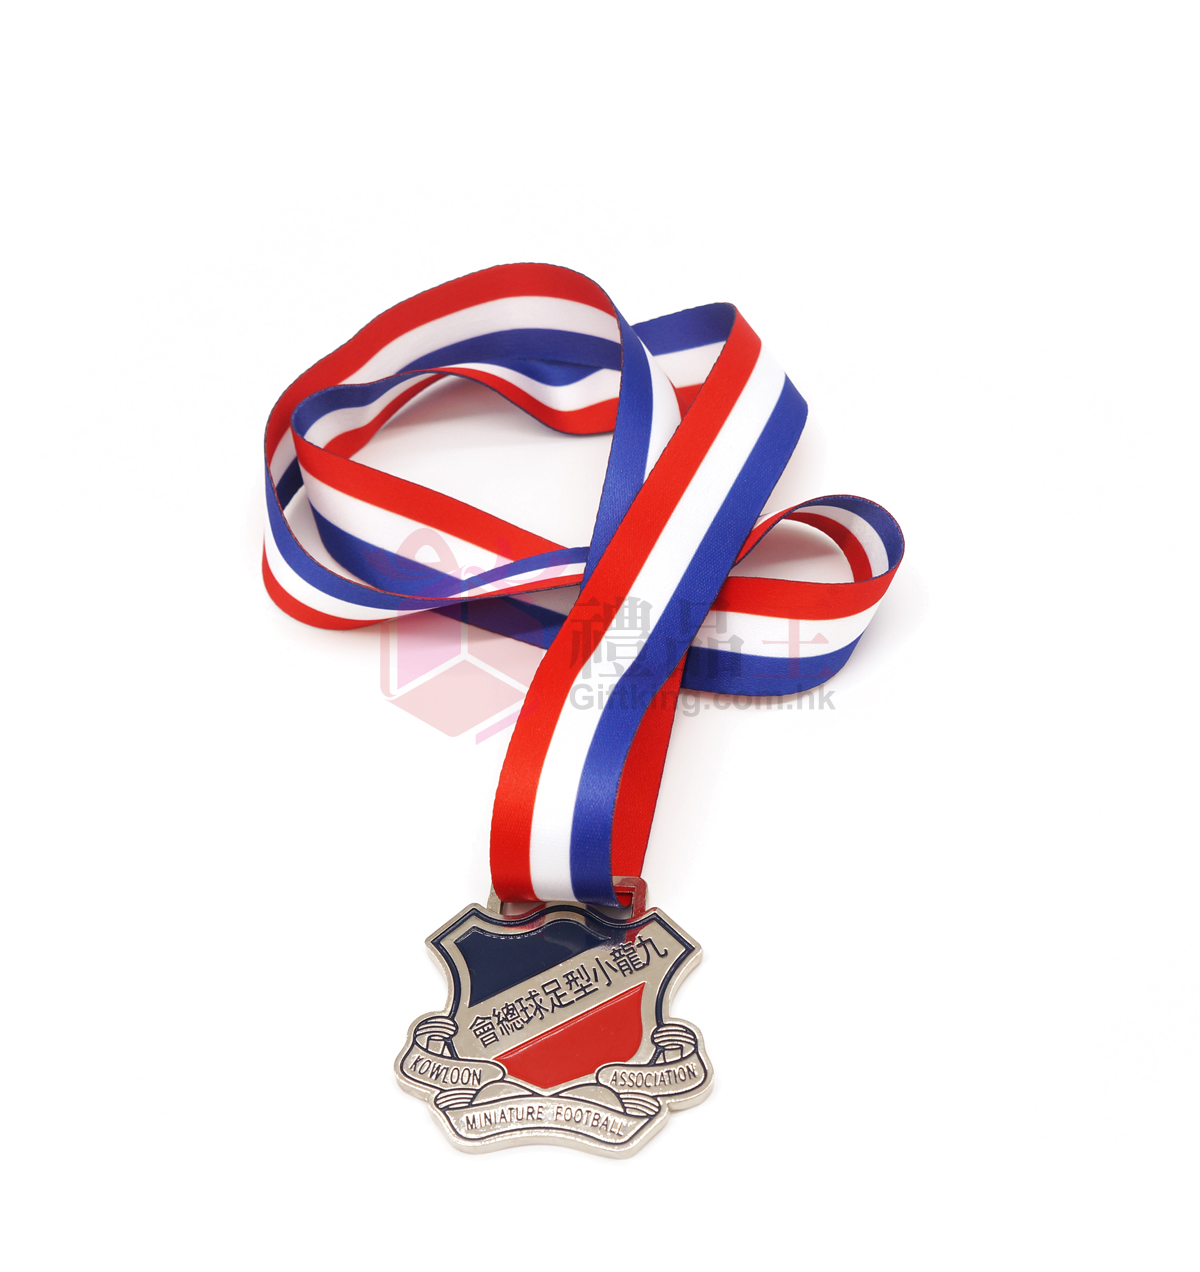 Kowloon Miniature Football Association Medal (Sports Gift)